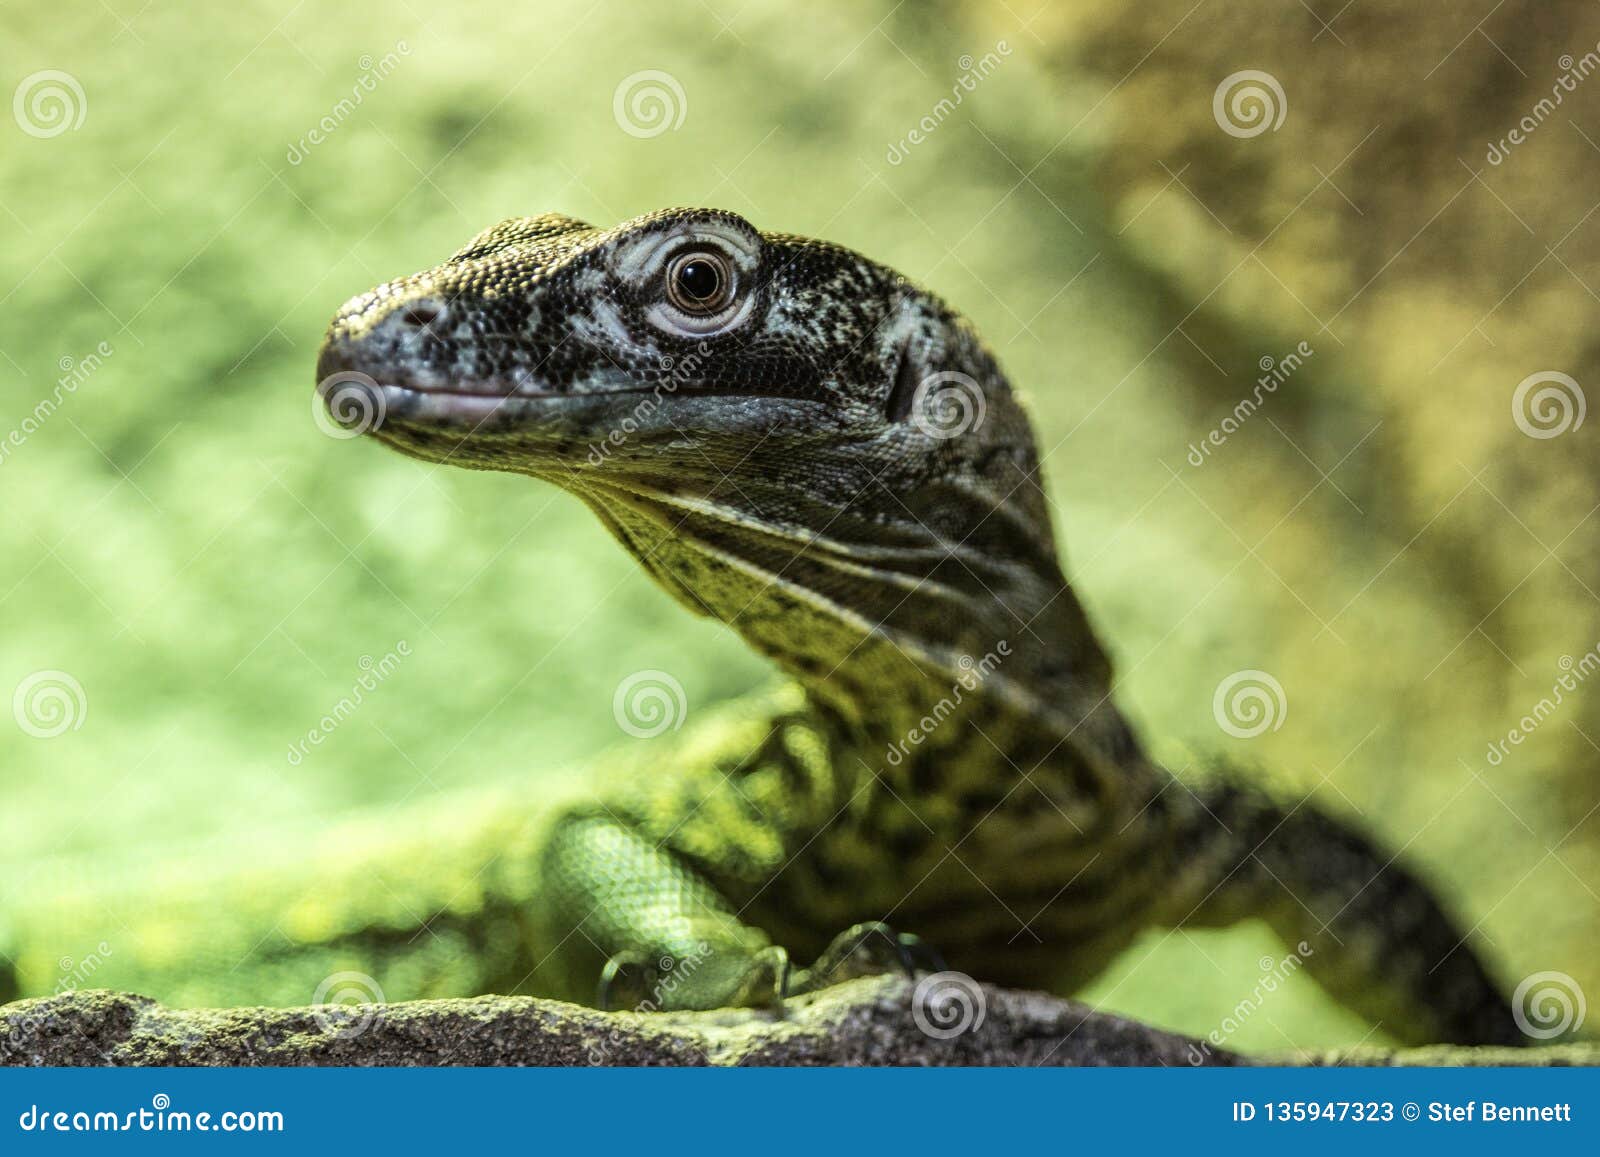 lizard, green